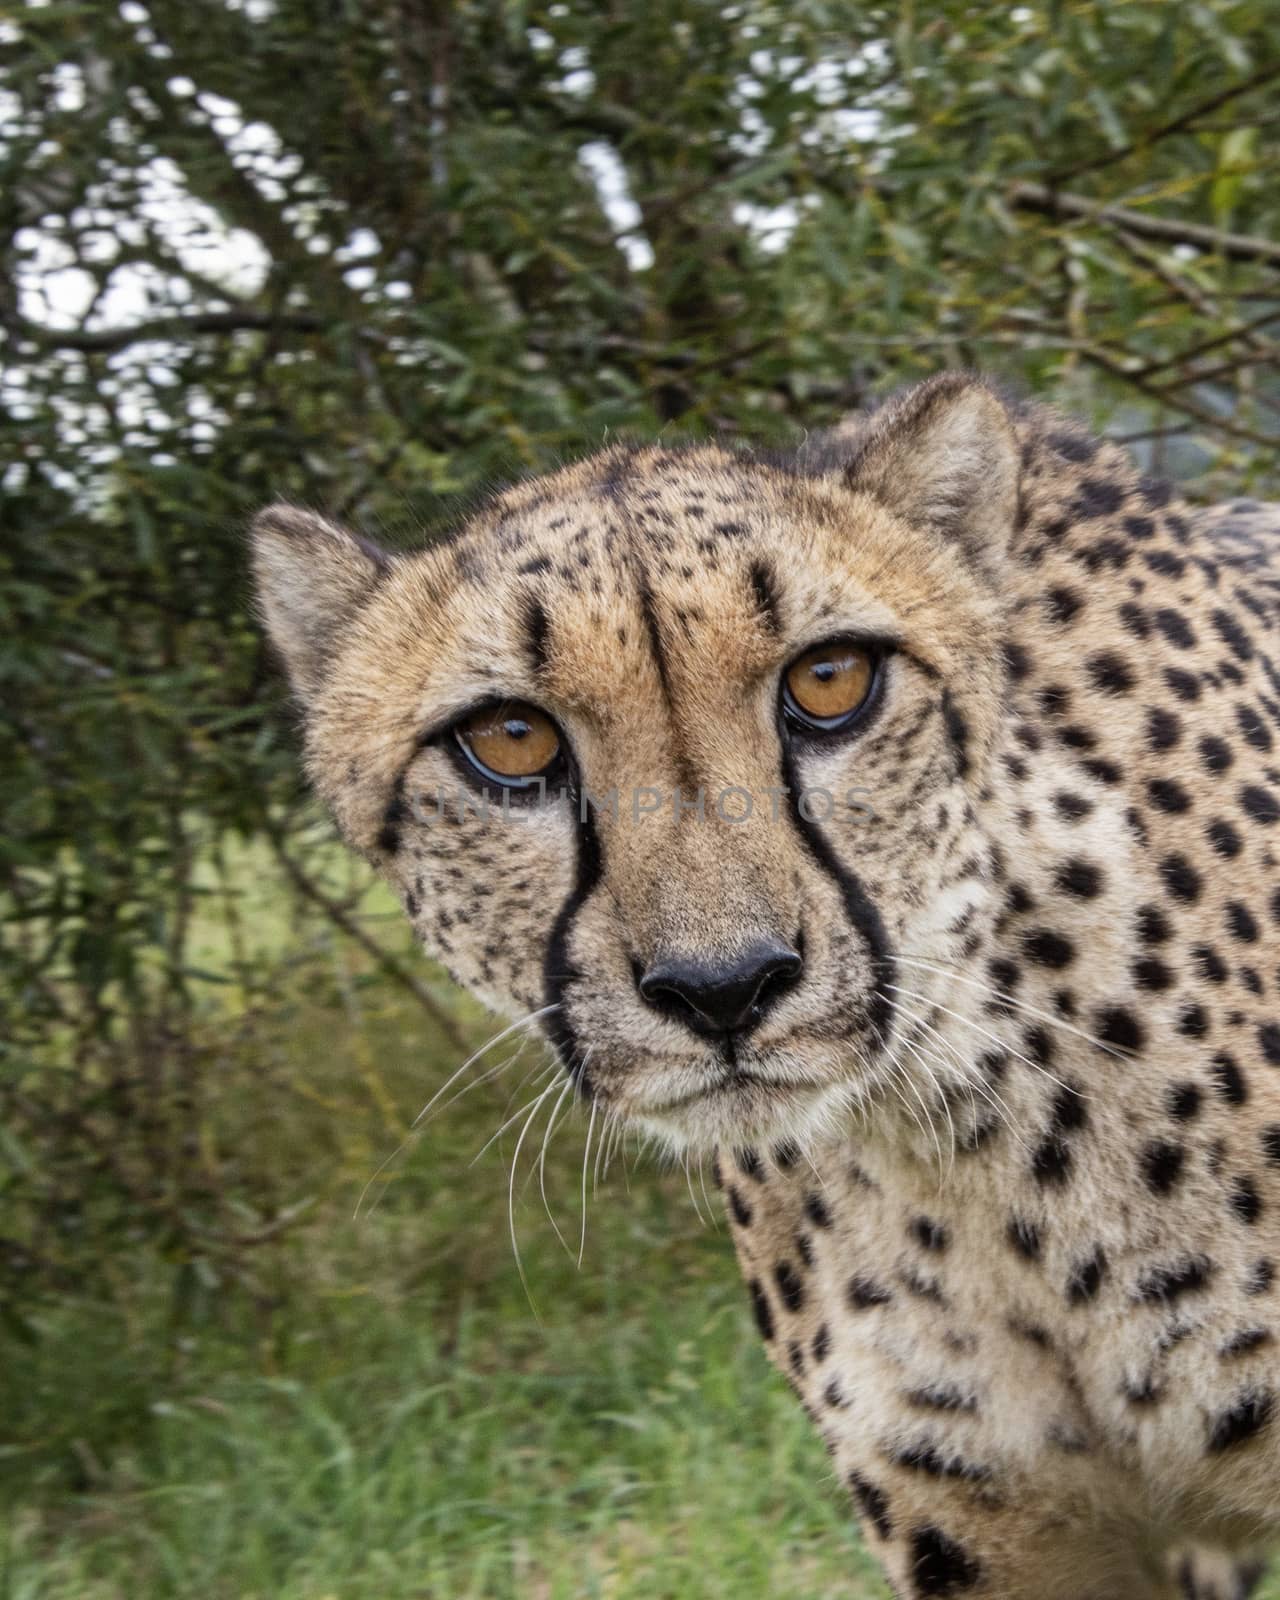 UK, Hamerton Zoo - August 2018: Cheetah in captivity - portrait